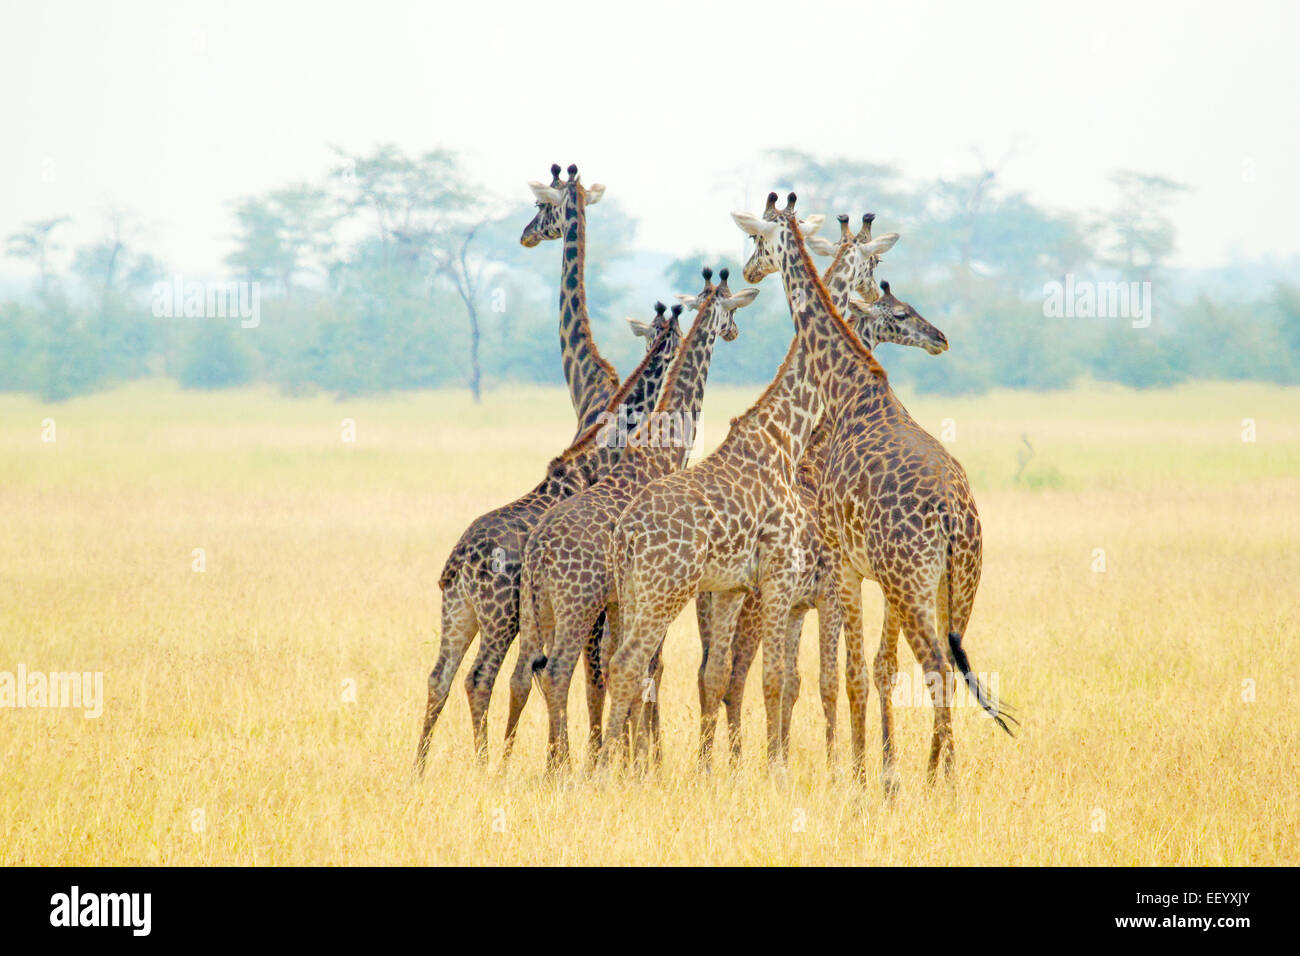 A group of giraffes (Giraffa camelopardalis) in Serengeti National Park, Tanzania Stock Photo